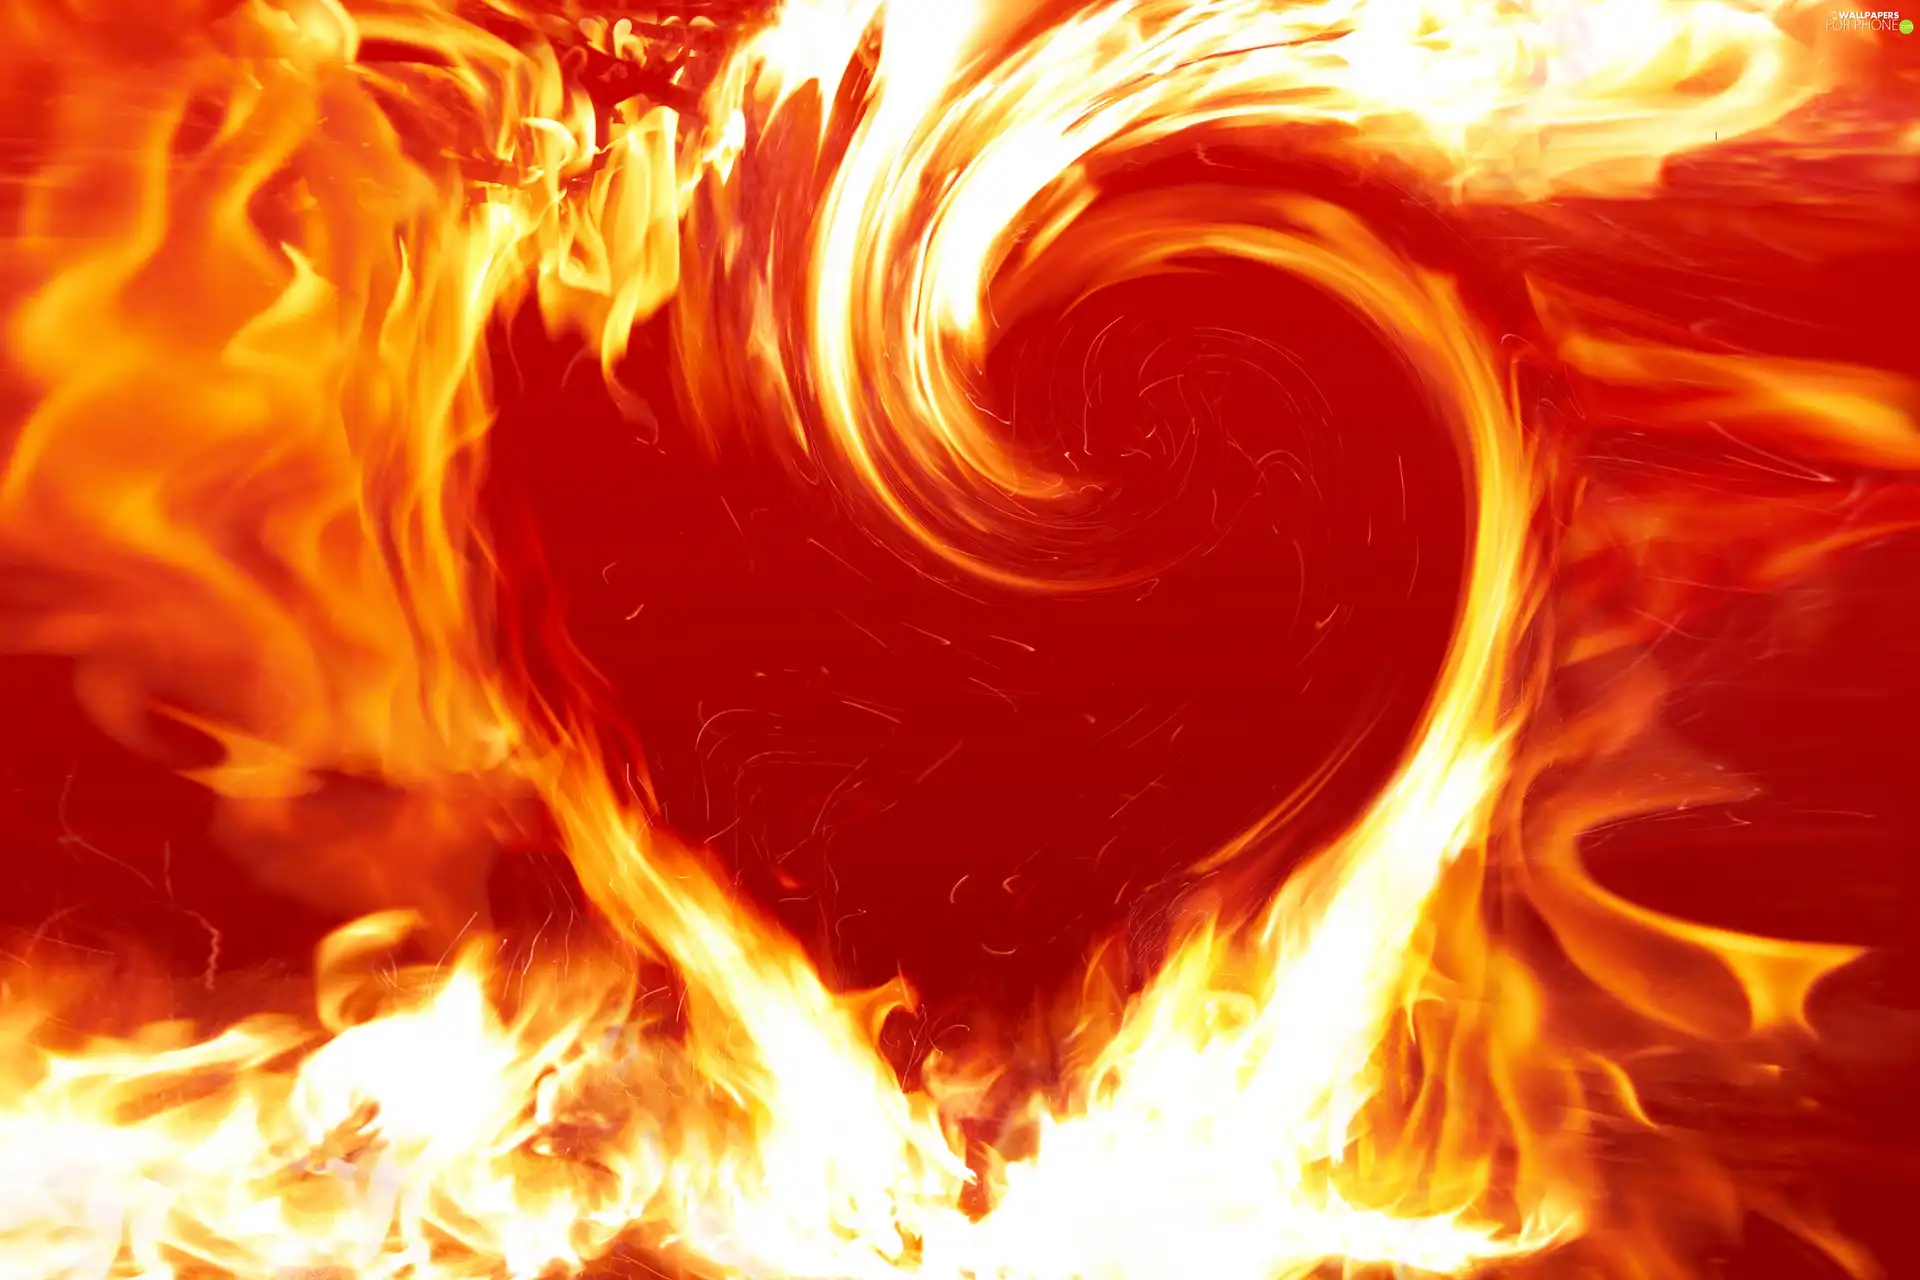 Heart, Big Fire, Valentine